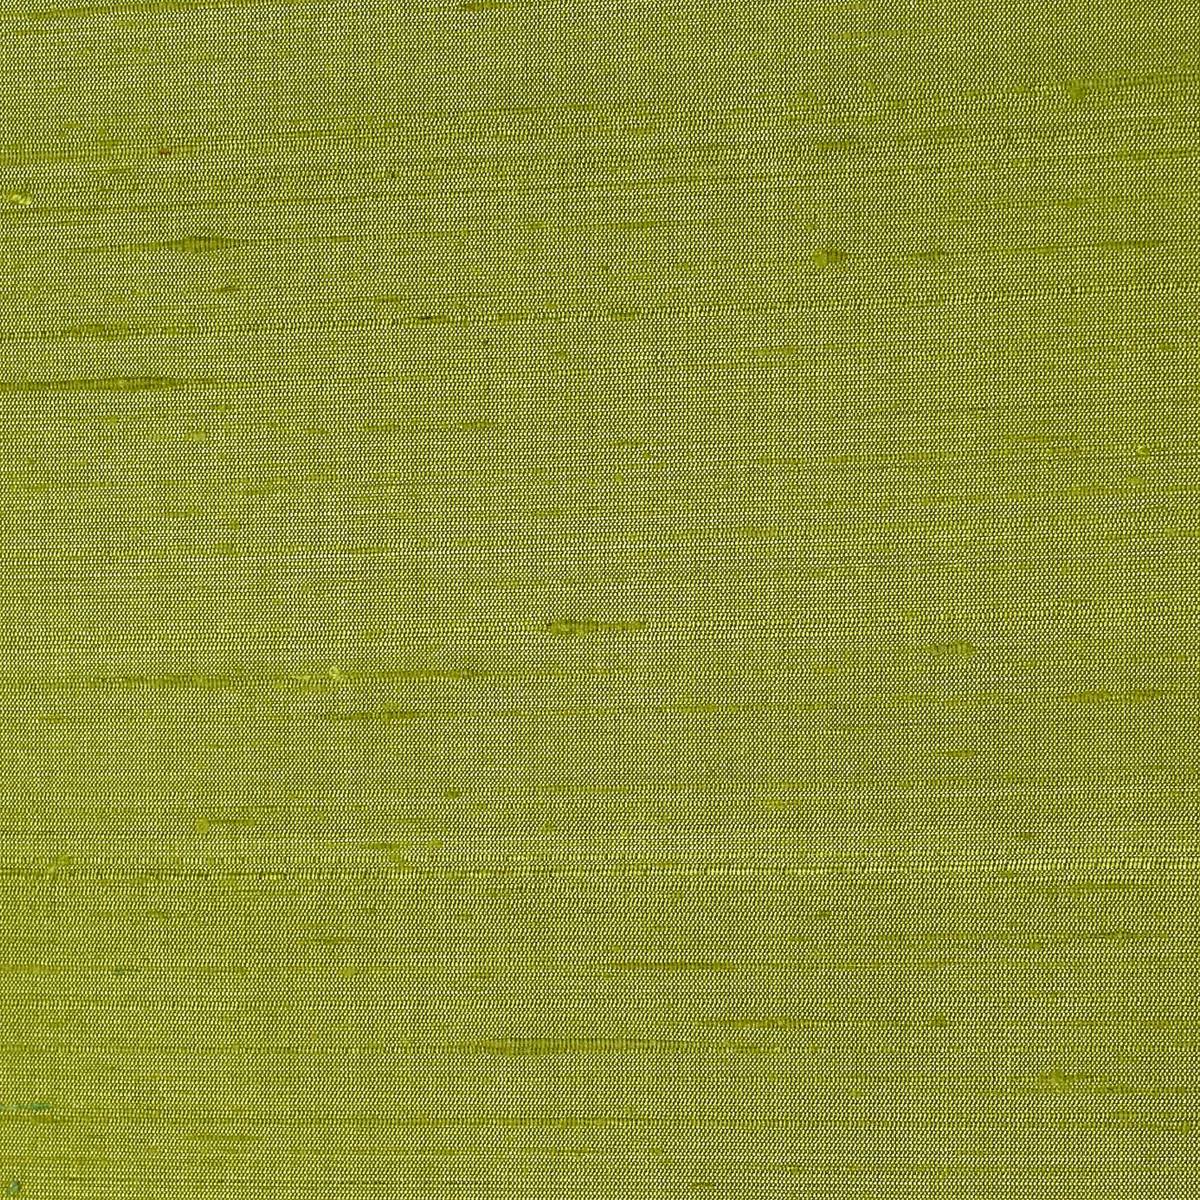 Lilaea Silks Meadow Fabric by Harlequin